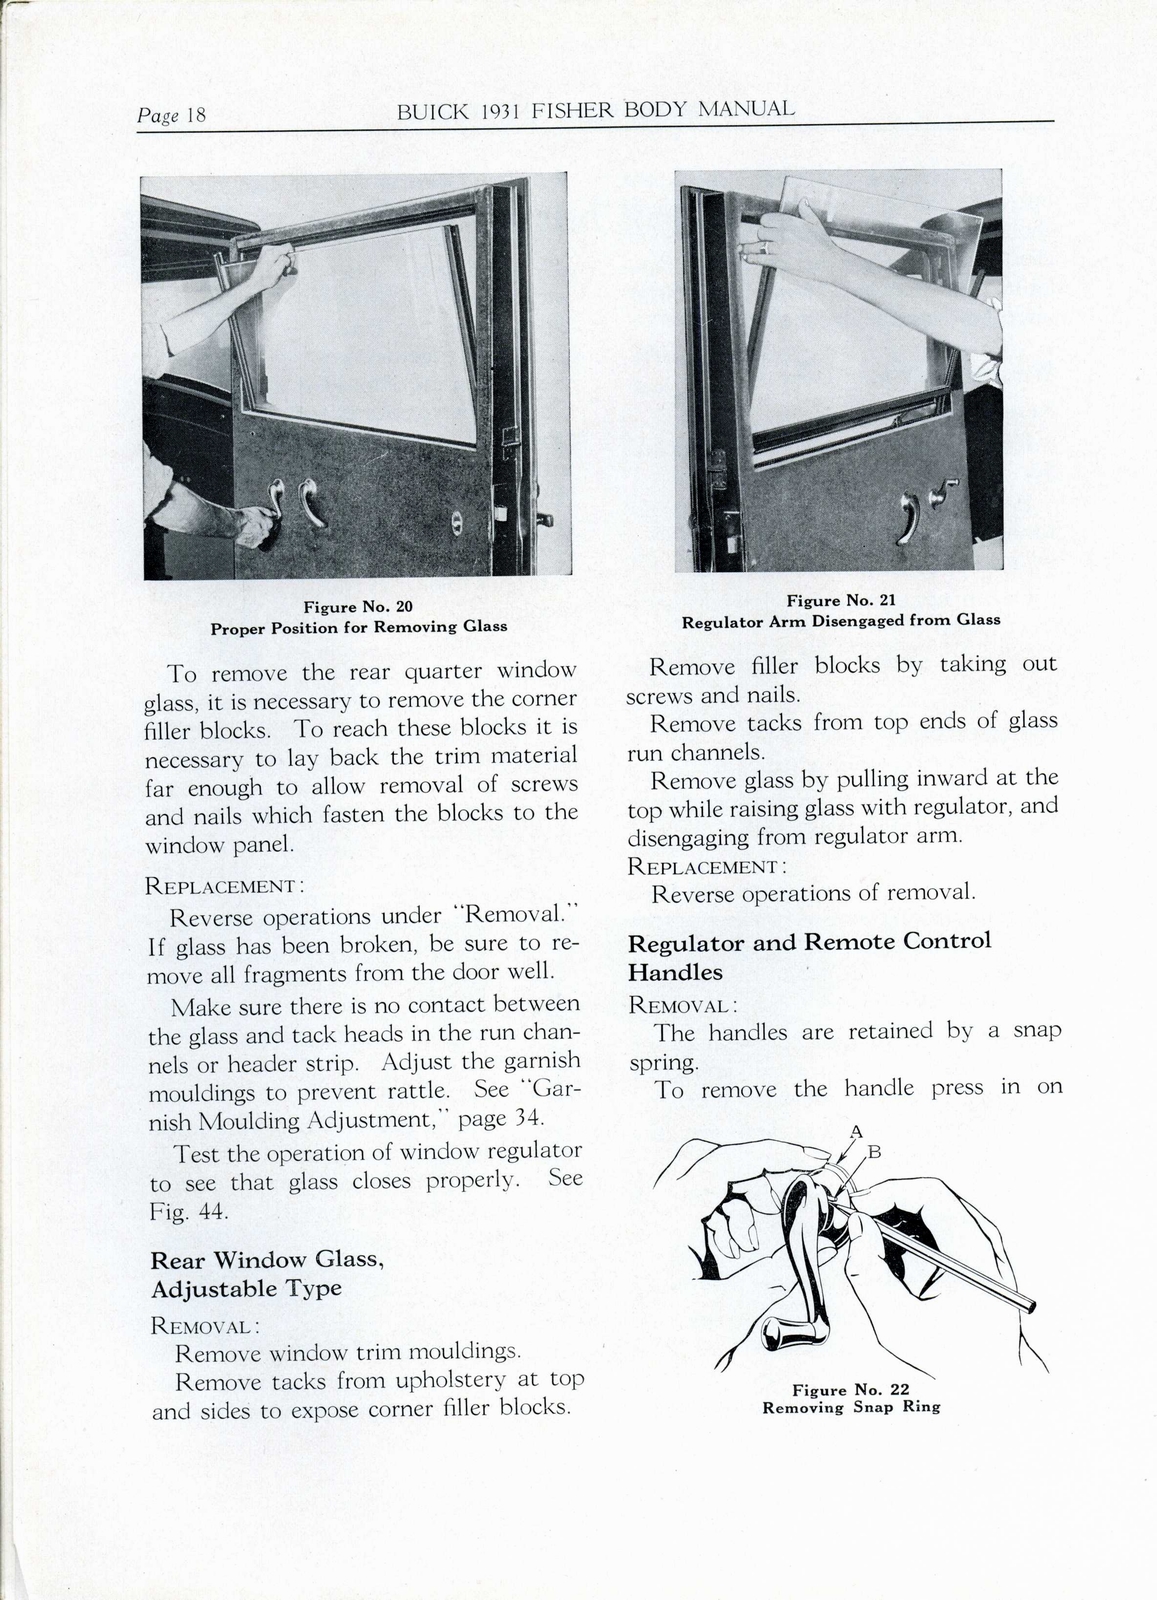 n_1931 Buick Fisher Body Manual-18.jpg